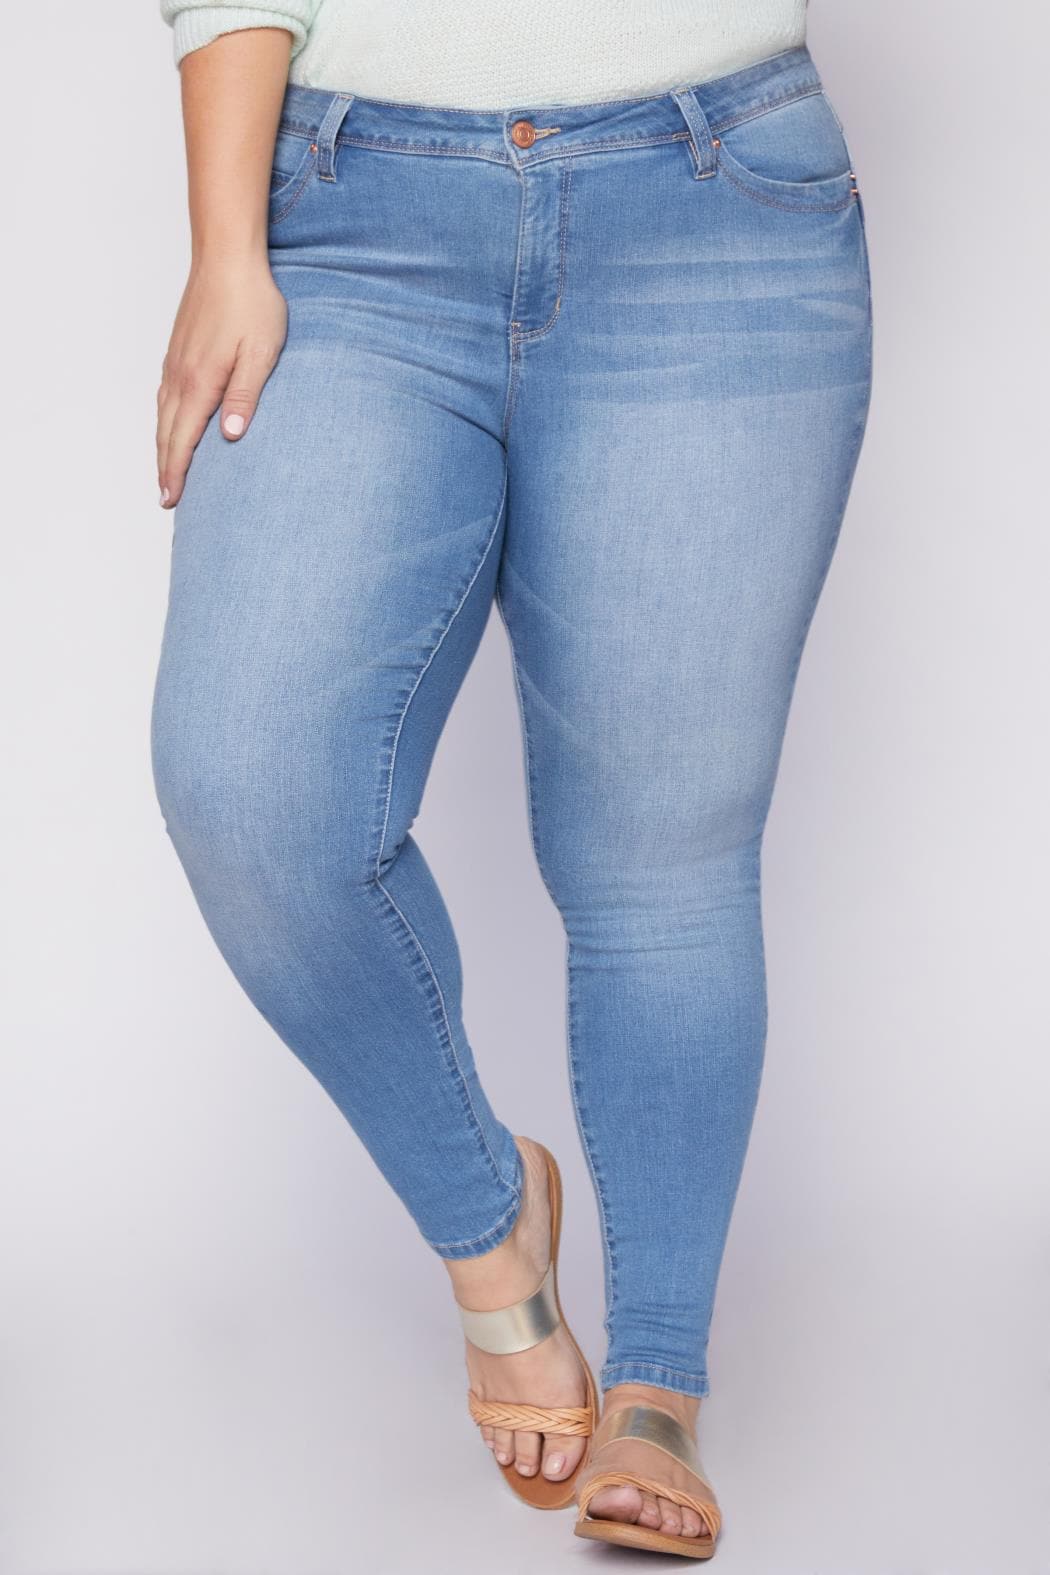 1826 WOMENS PLUS SIZE BLUE /BLACK denim jeans PANTS BOOTCUT /SKINNY pants  PJ3687